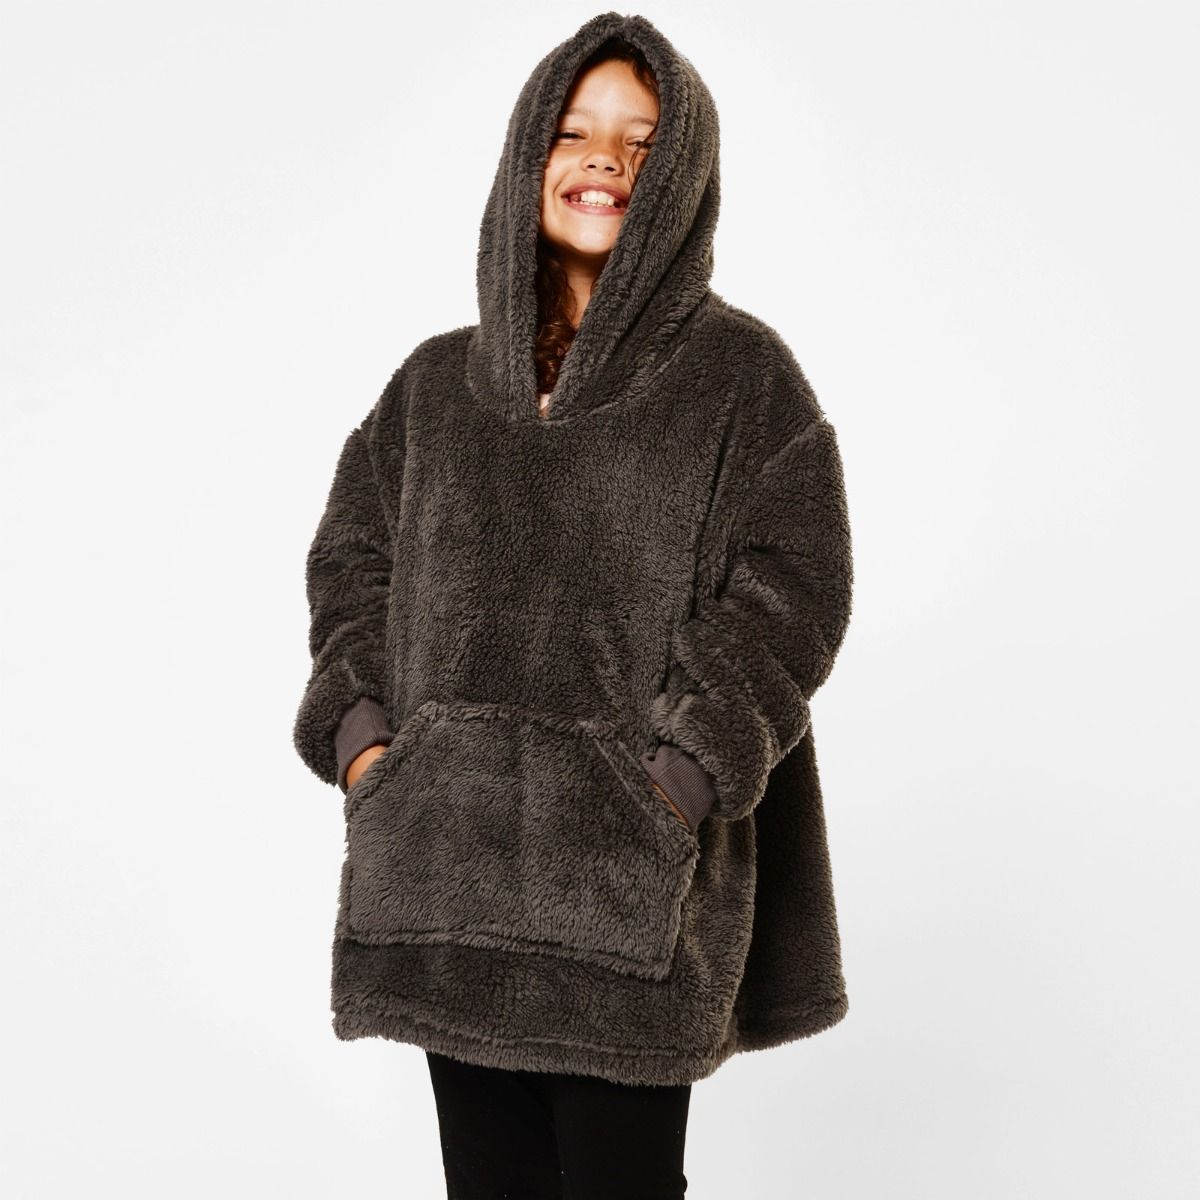 Brentfords Teddy Fleece Hoodie Blanket, Charcoal Grey - Kids - One Size